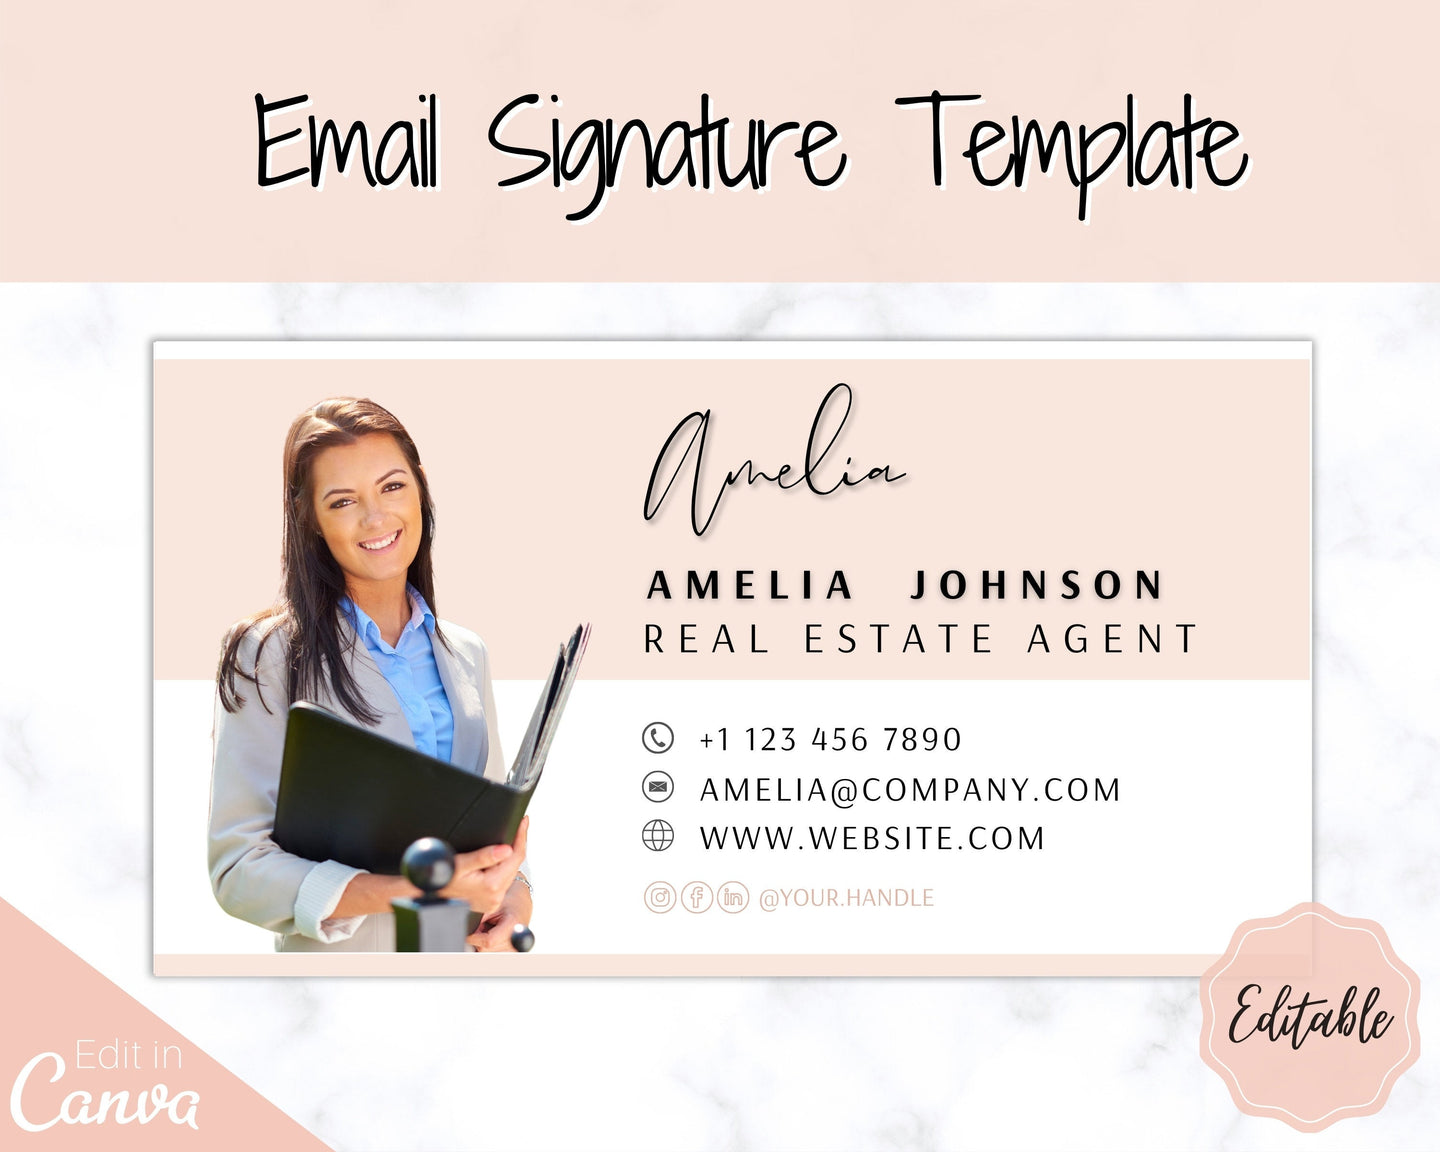 Email Signature Template with logo & photo! Editable Canva Signature Design. Minimalist, Realtor Marketing, Real Estate, Professional, Gmail | Style 5